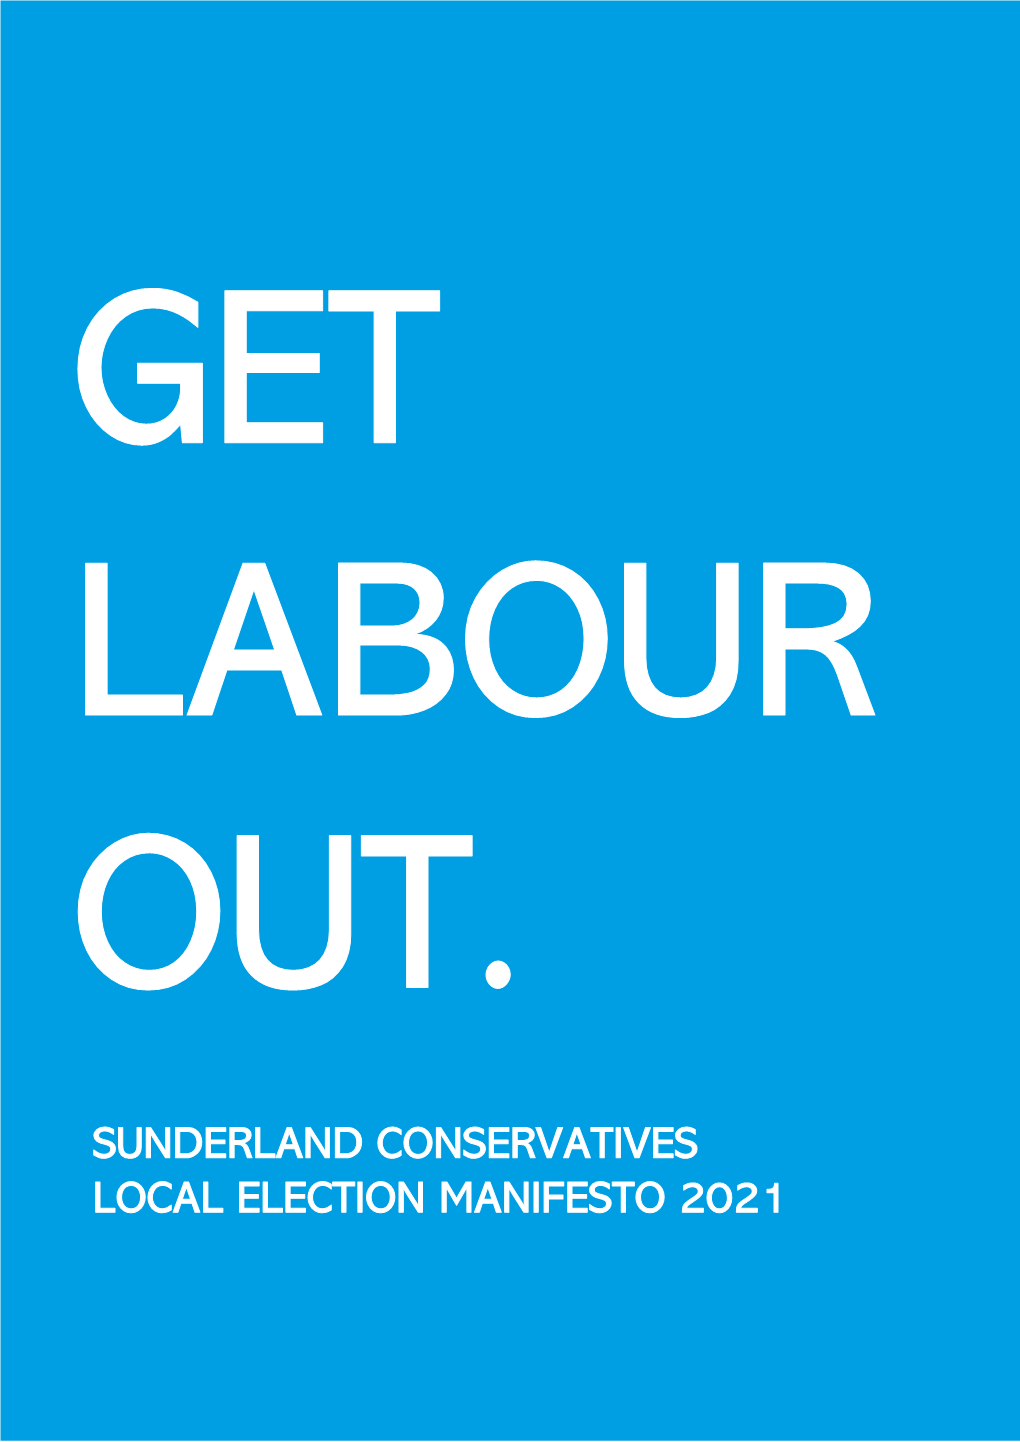 Sunderland Conservatives Local Election Manifesto 2021